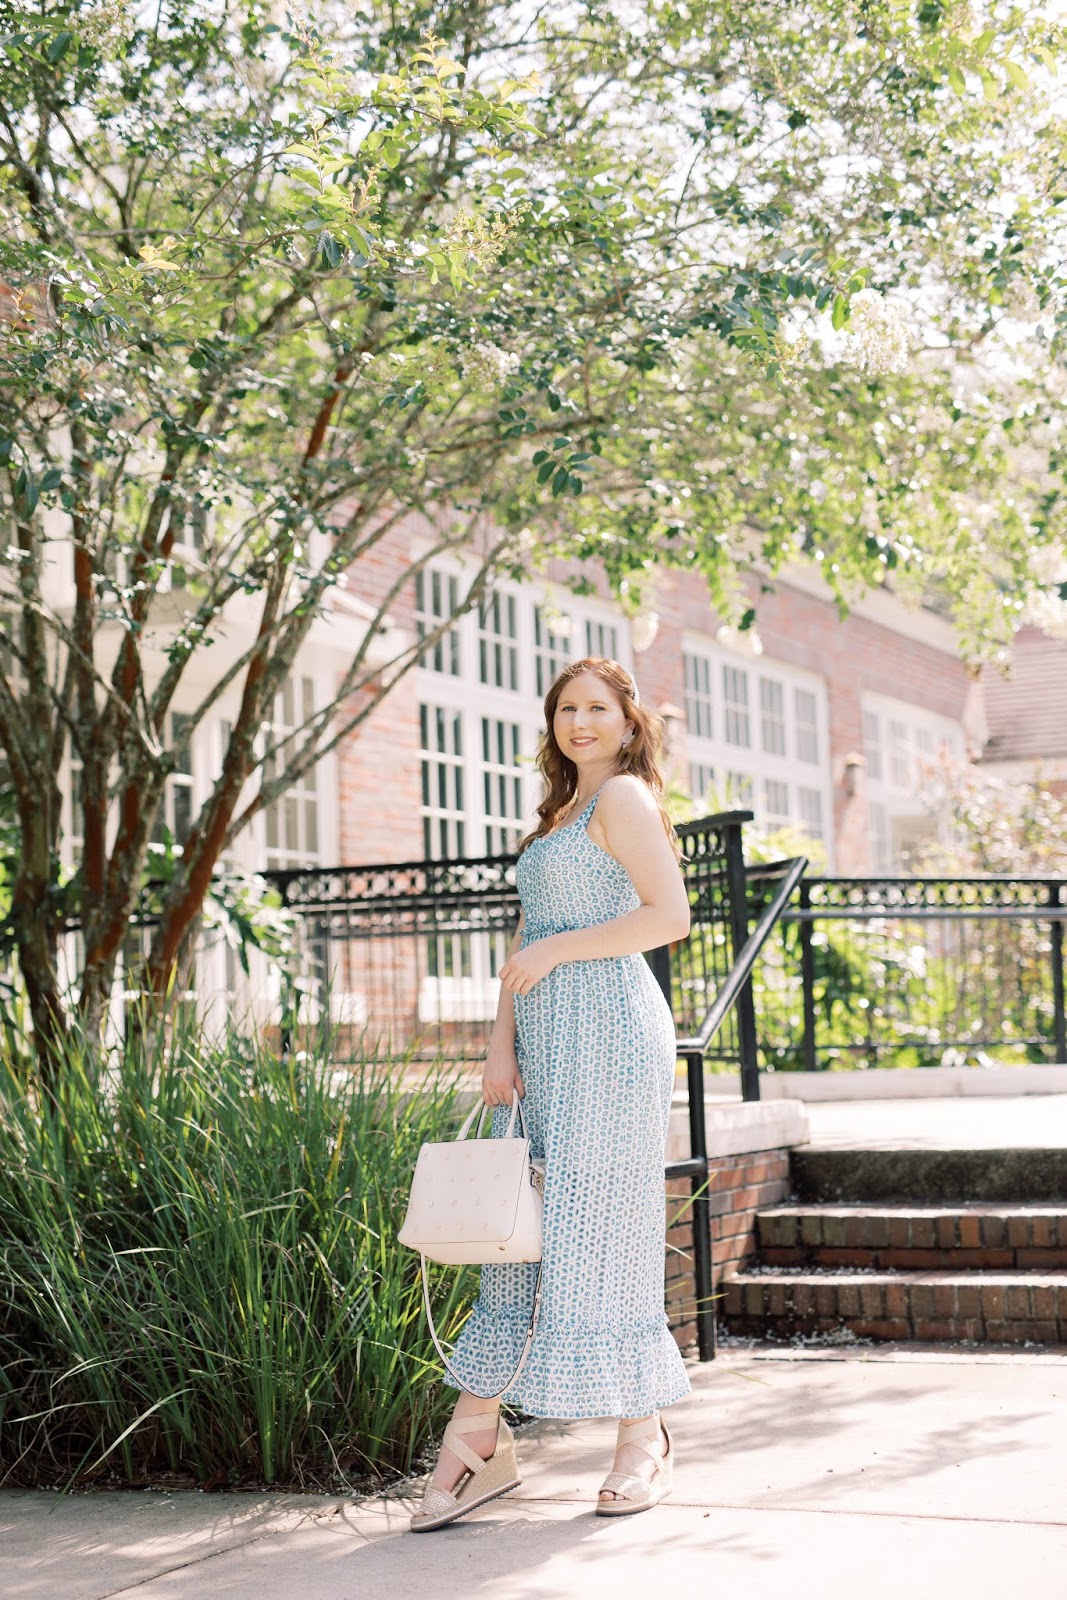 Tampa Blogger Amanda Burrows | Affordable by Amanda | Summer Eyelet Embroidery Dresses Under $50 | Darla Eyelet Dress Francesca's Semi-Annual Sale